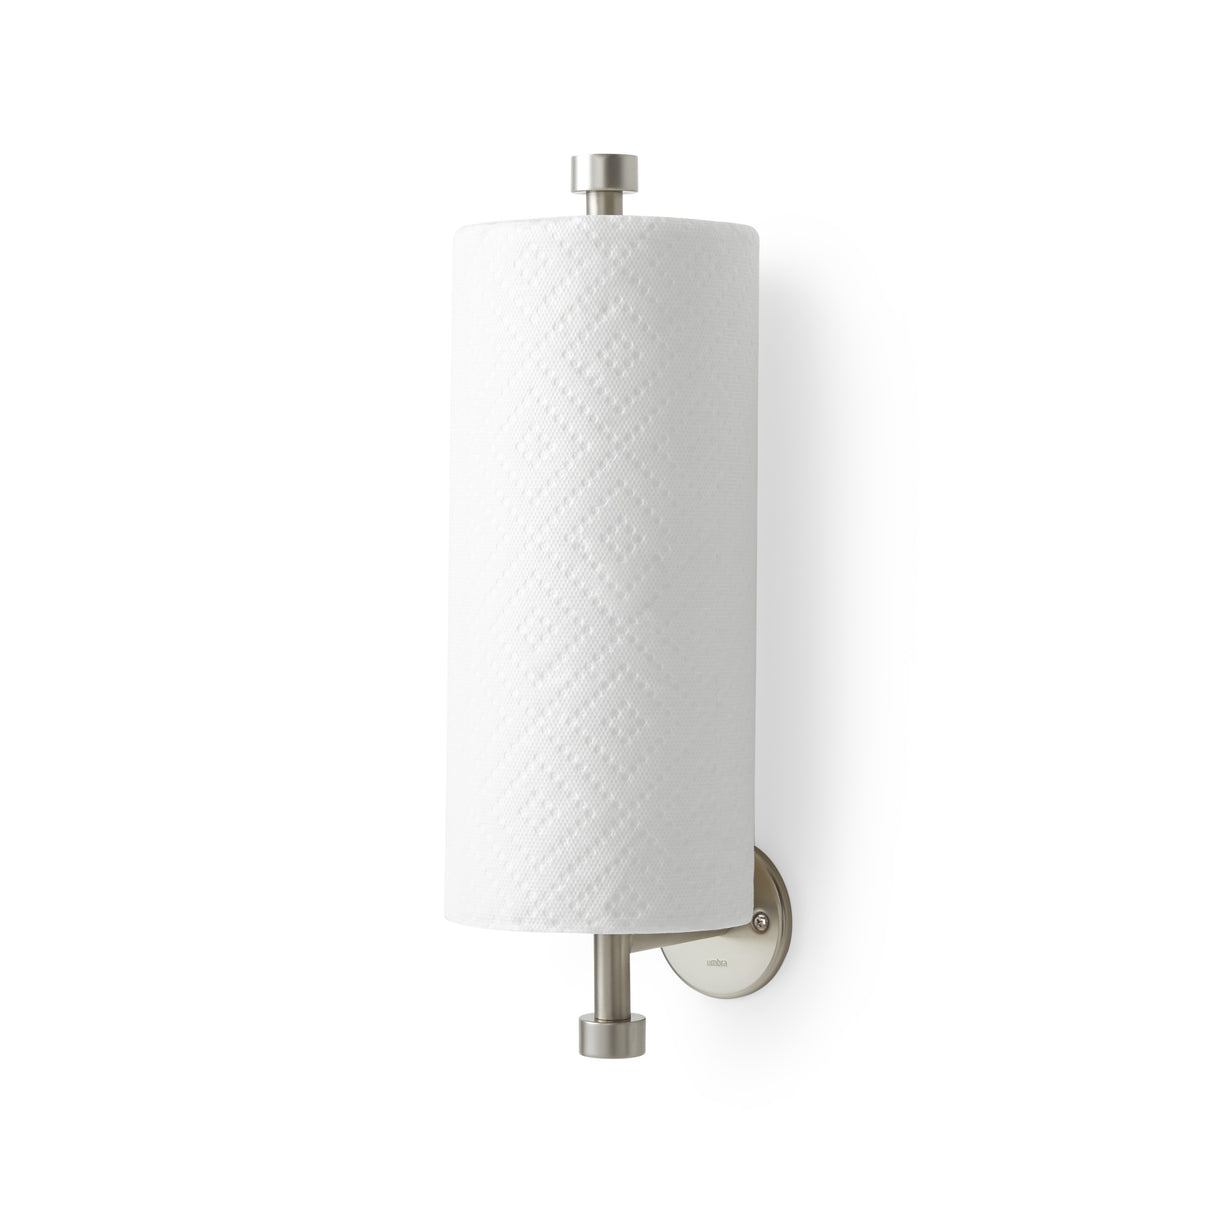 Wall Mounted Paper Towel Holders | color: Nickel